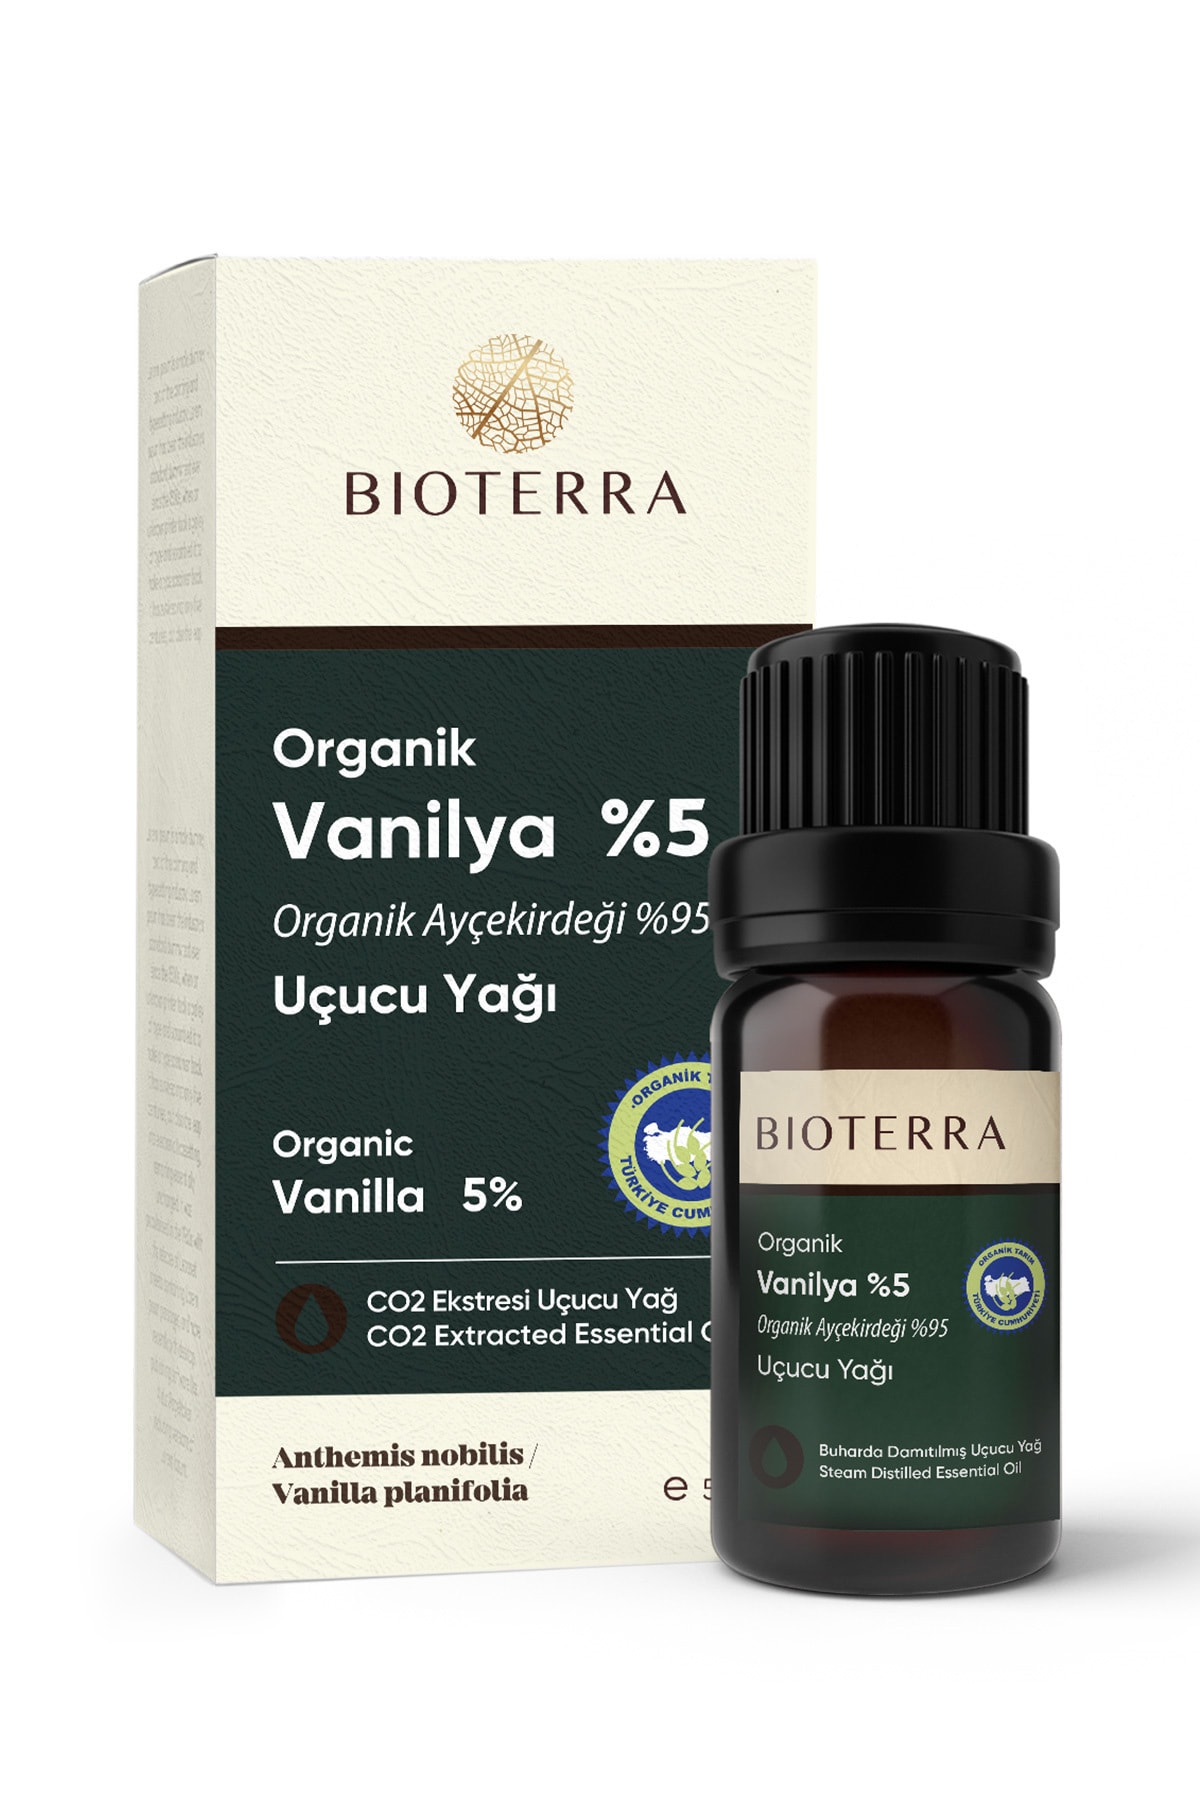 Bioterra Organik Vanilya Uçucu Yağı 5 ml RN7006